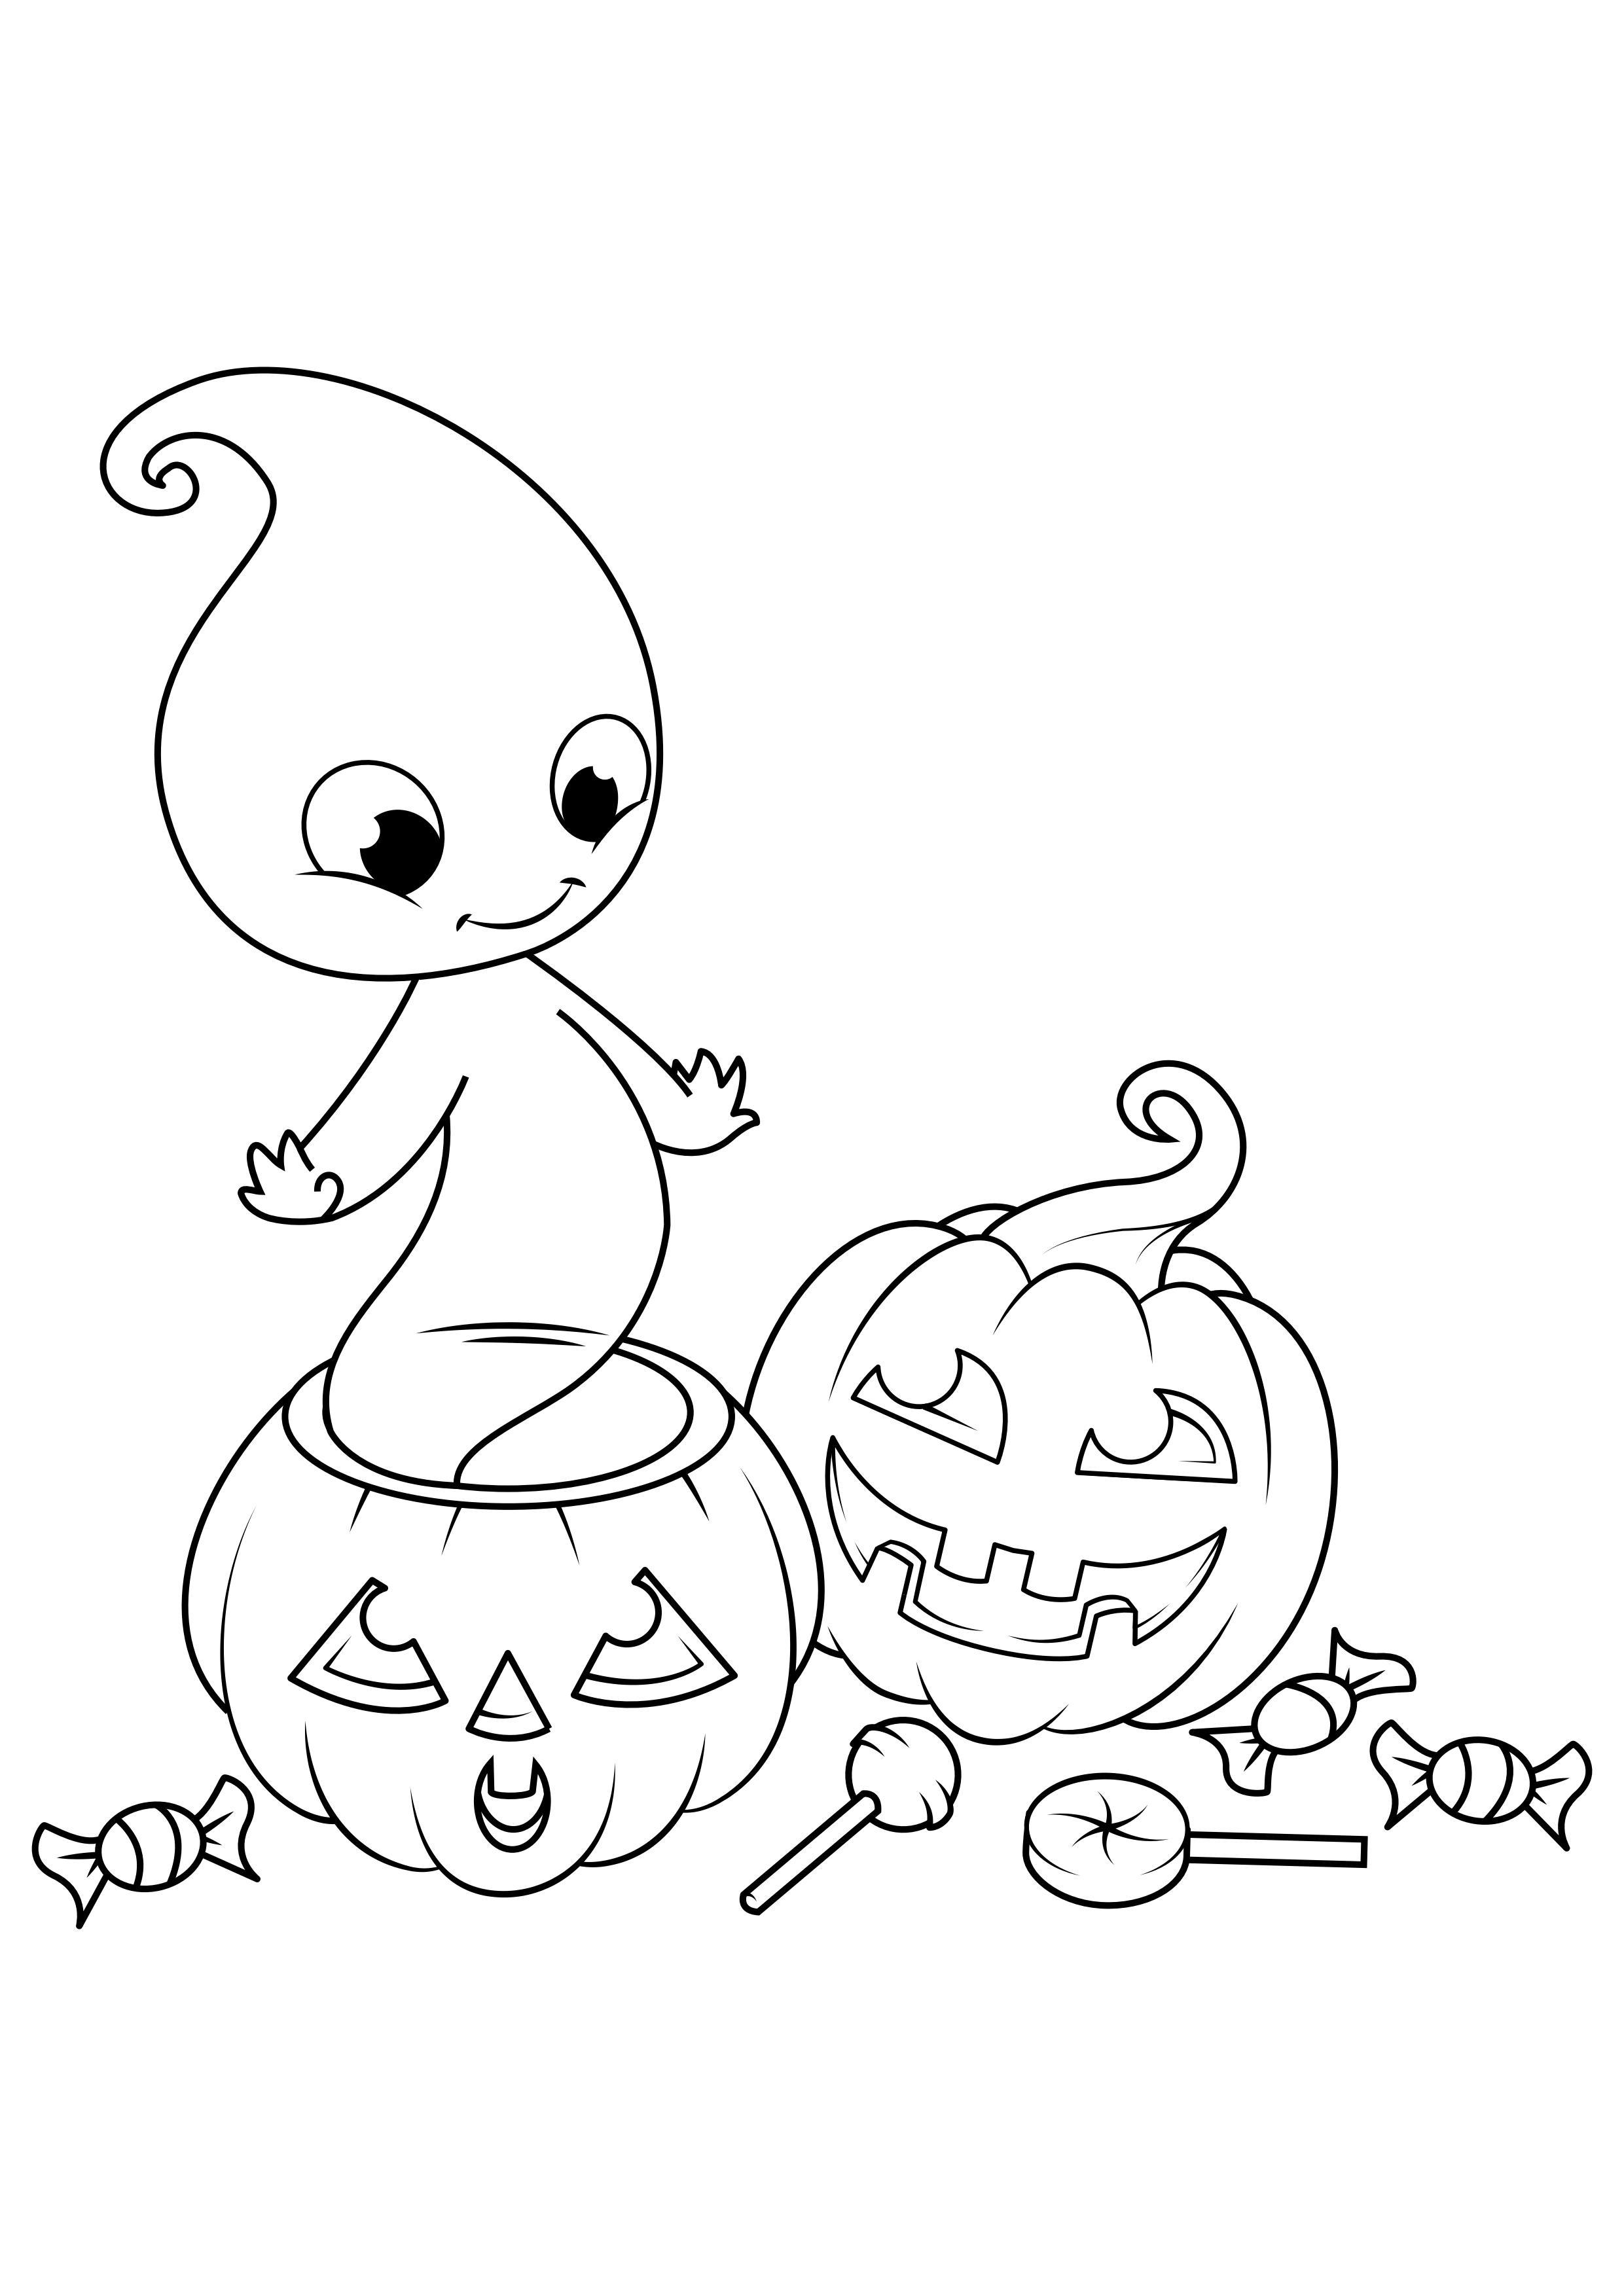 Dibujo para colorear Fantasma de halloween